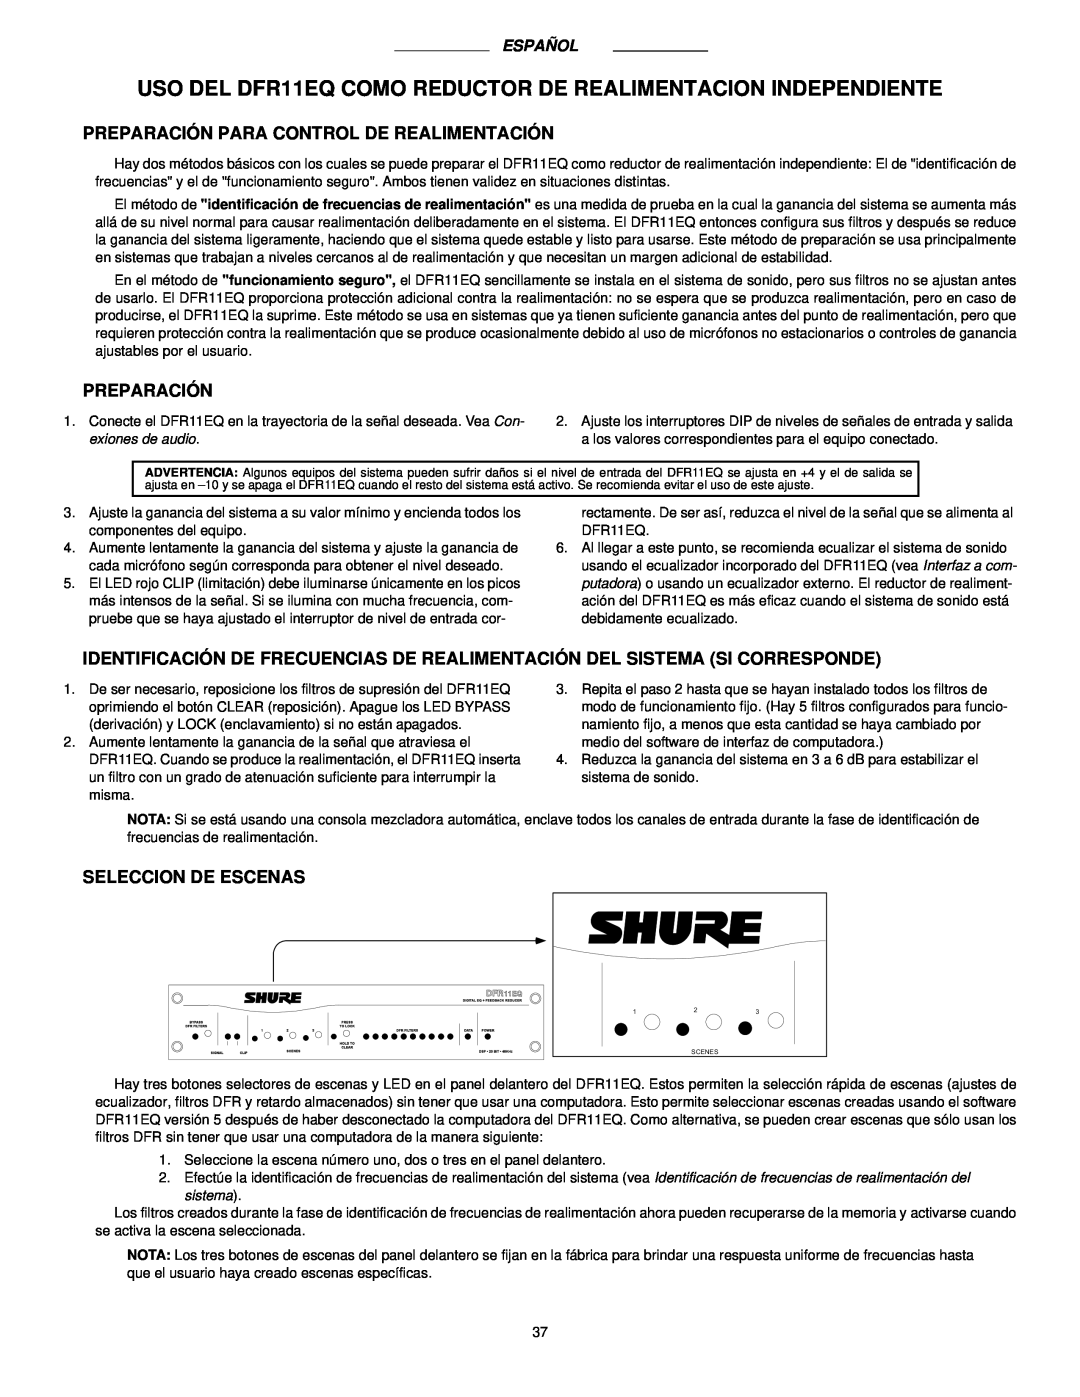 Shure DFR11EQ manual Preparación Para Control De Realimentación, Seleccion De Escenas 